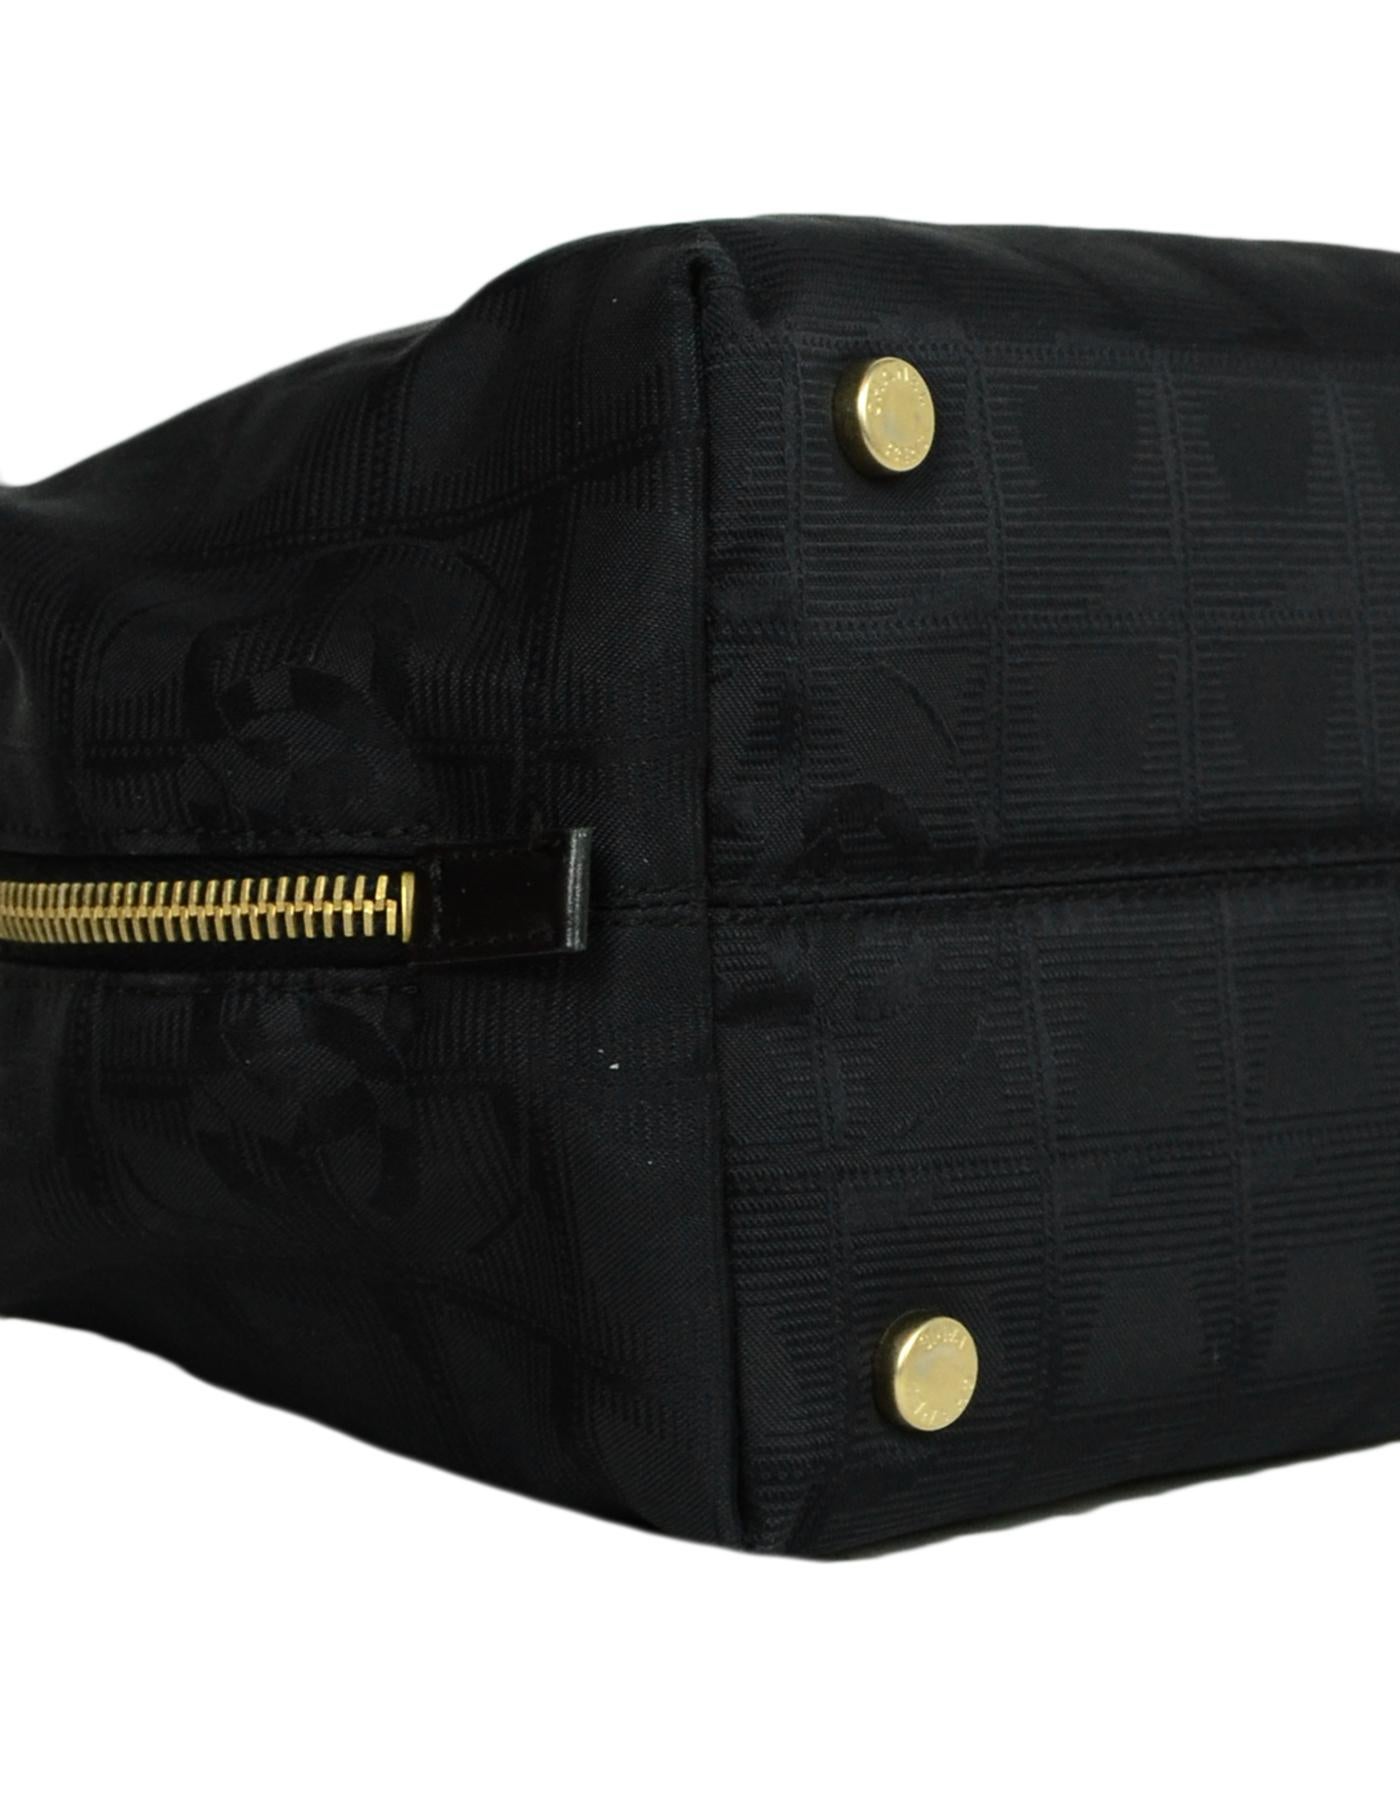 Black Chanel Canvas CC Tote Bag w/ Leather Handles